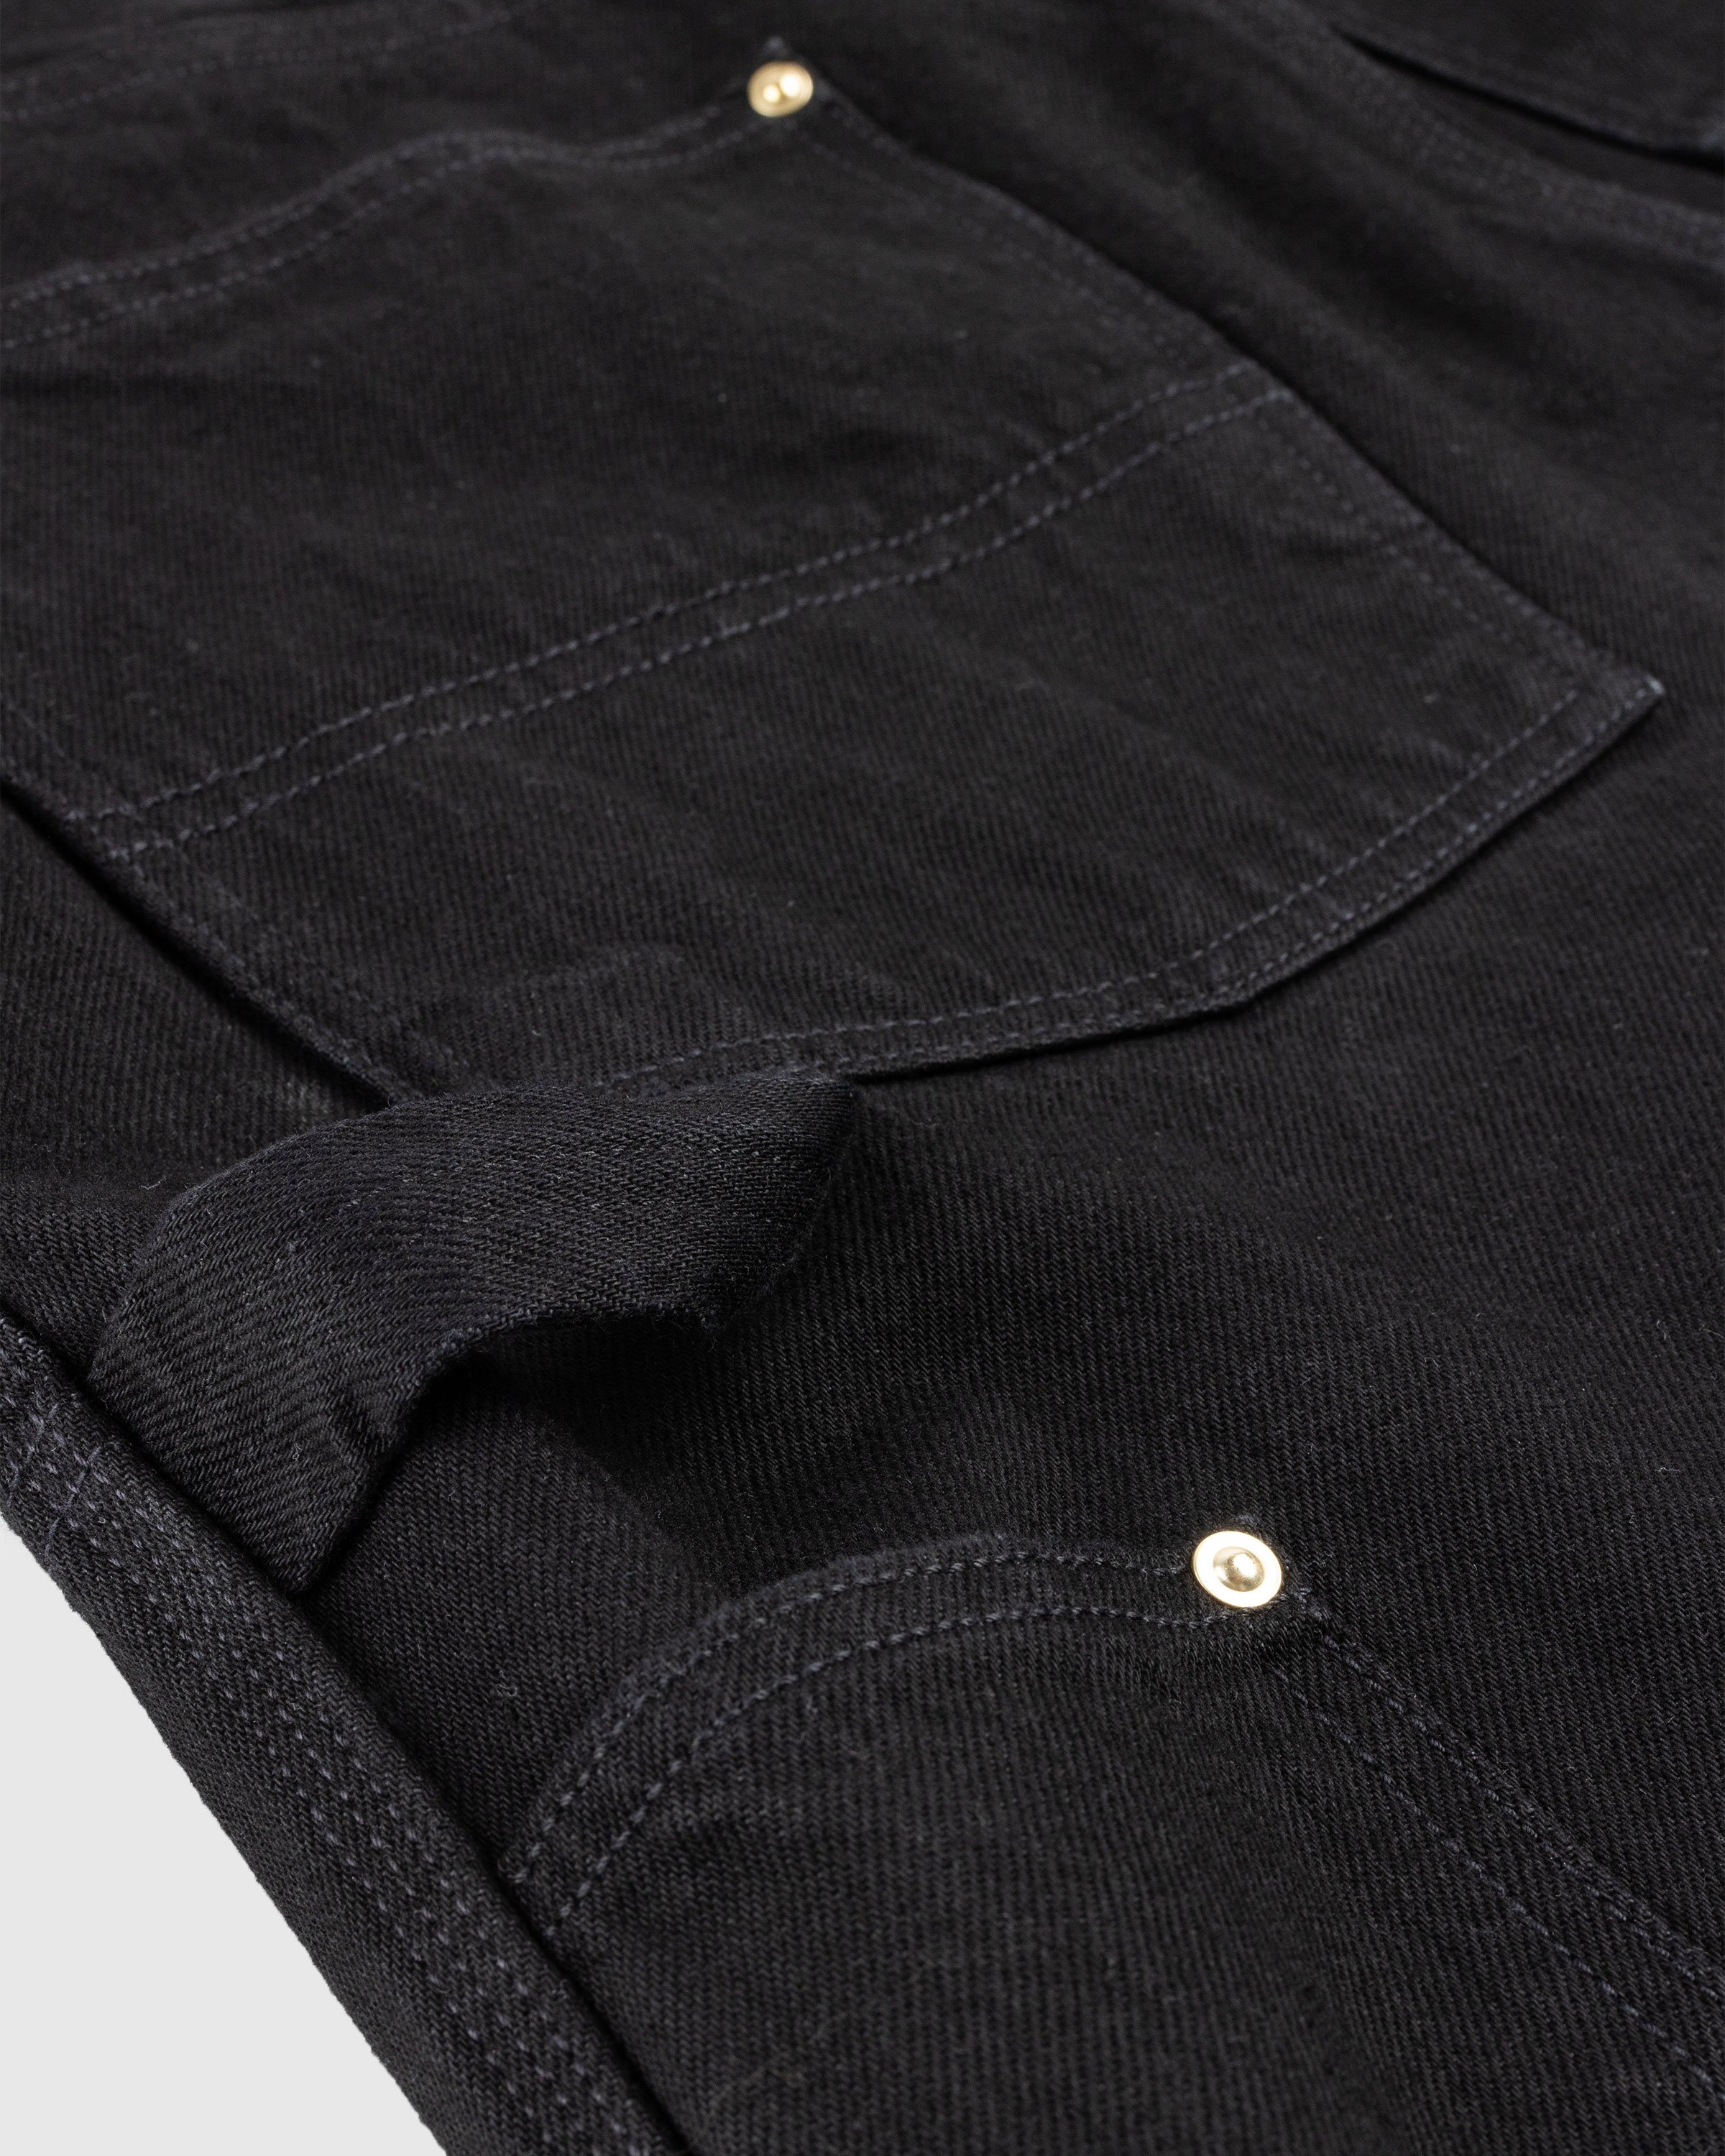 Carhartt WIP - Nash Double Knee Pant Black - Clothing - Black - Image 6